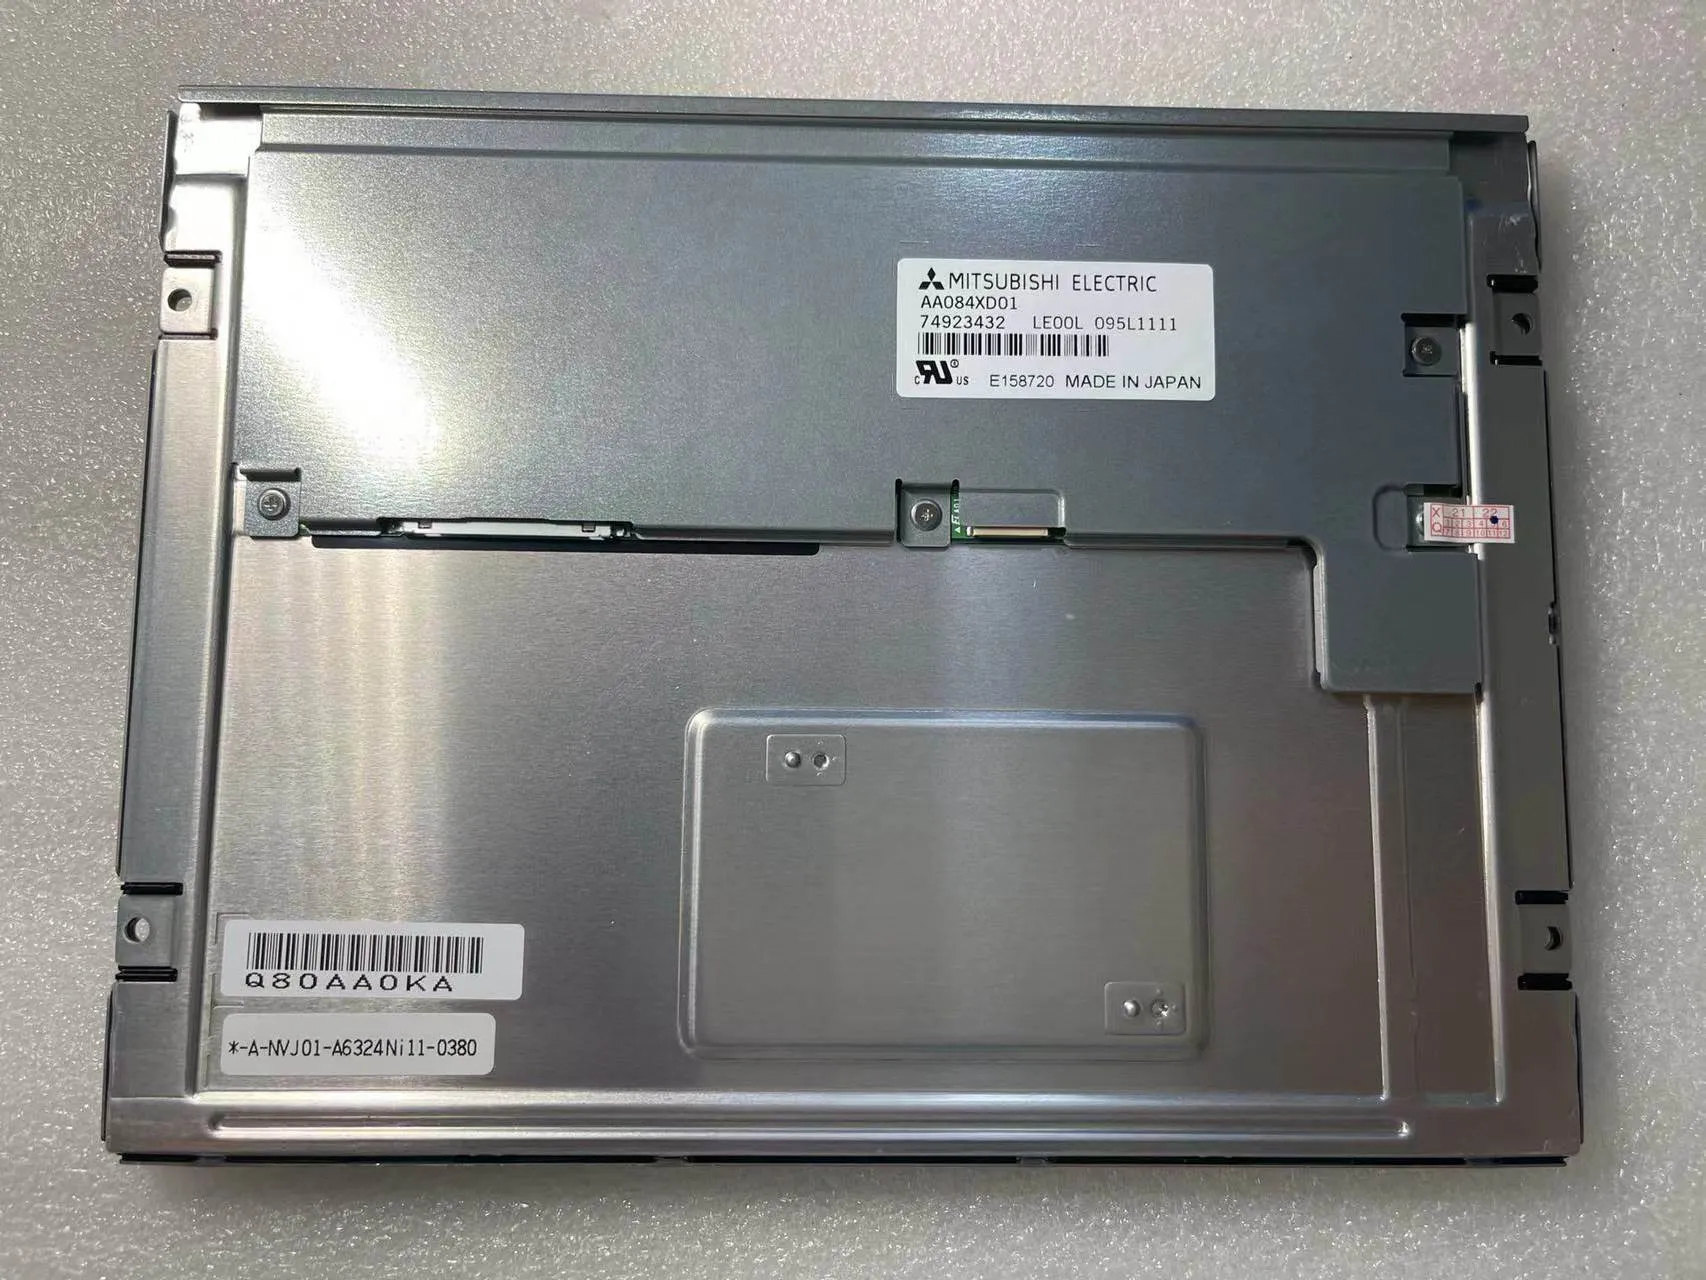 Original Mitsubishi Bildschirm AA084XD01 8.4 "Auflösung 1024x768 Dispieurbildschirm